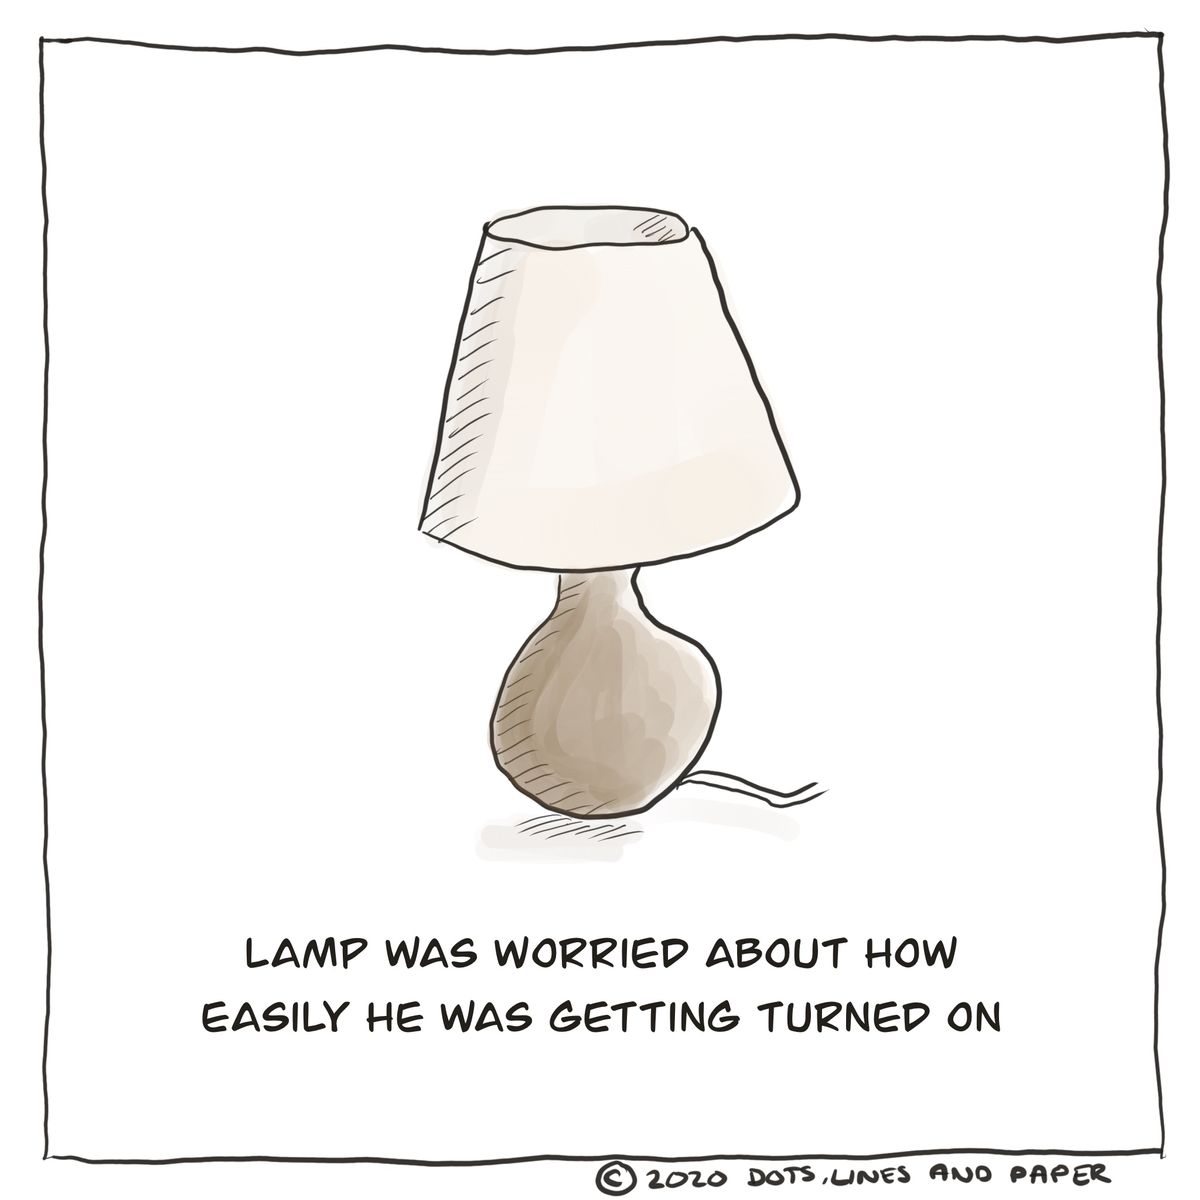 Lamp was worried